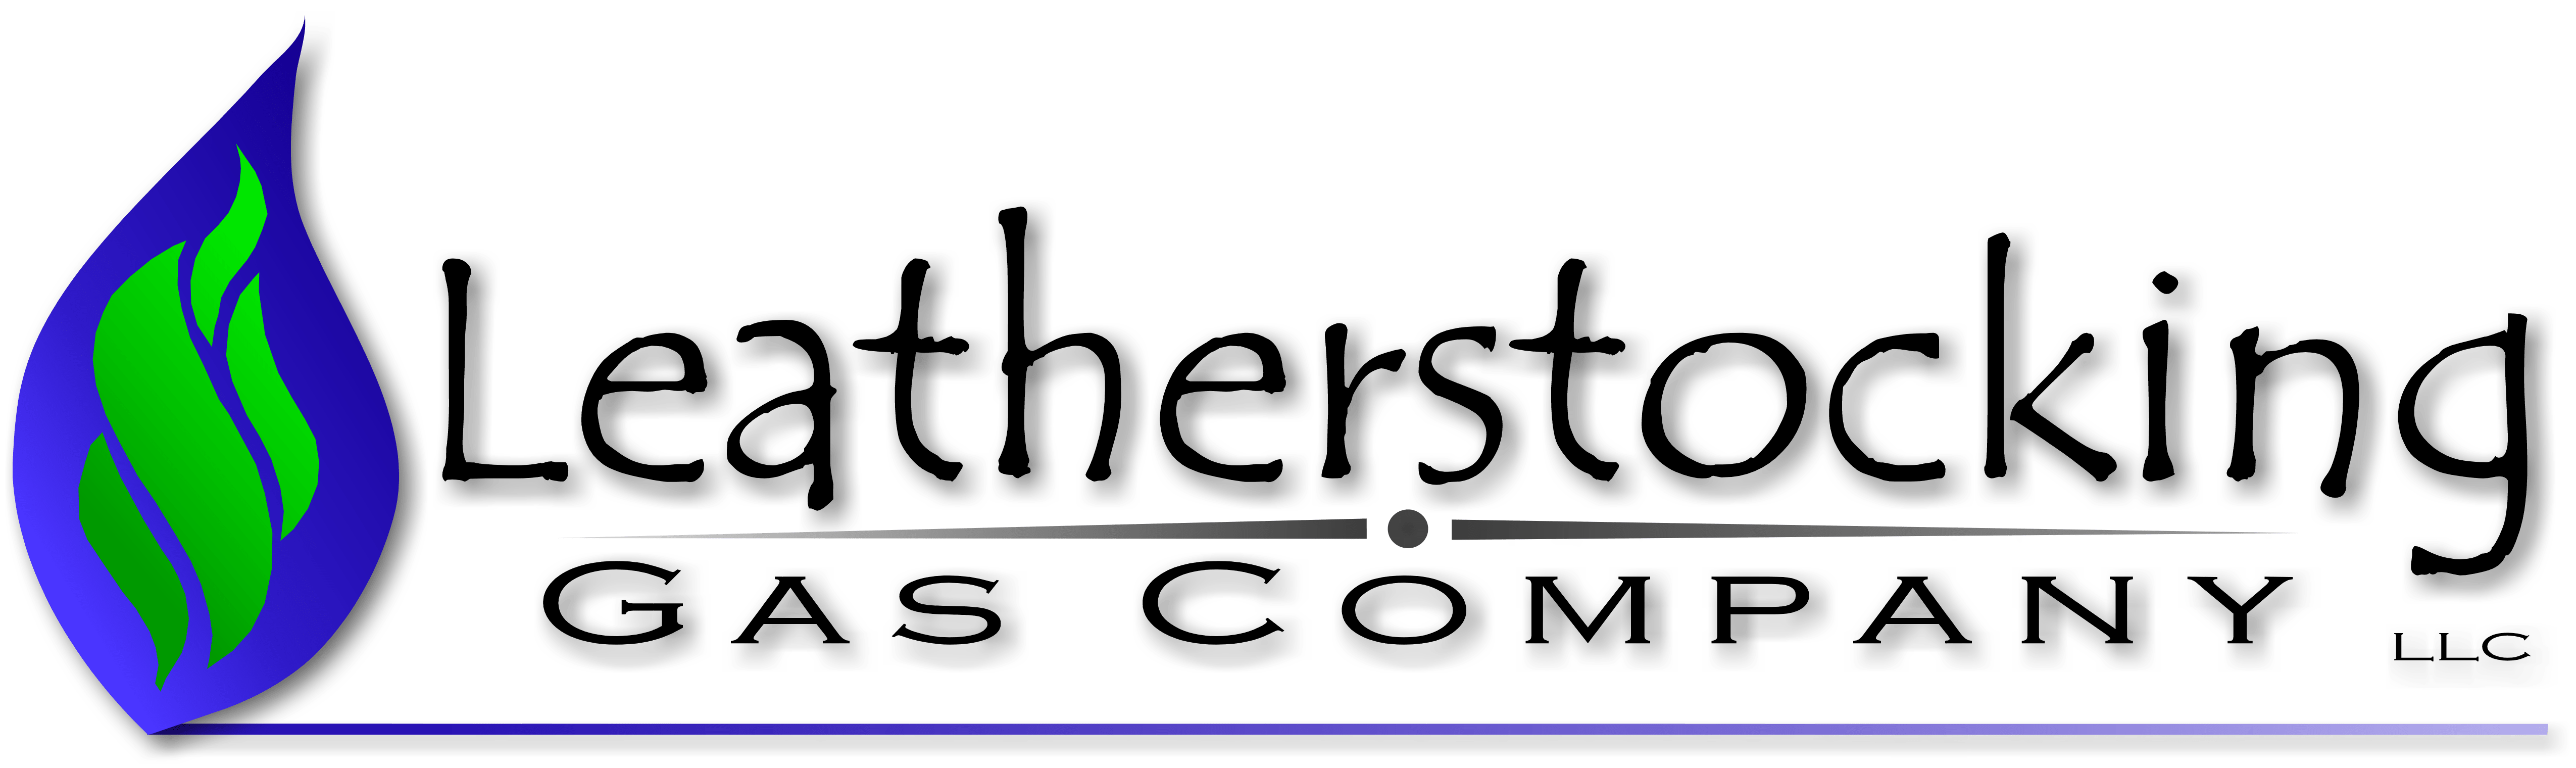 LeatherStocking Logo - Sponsors